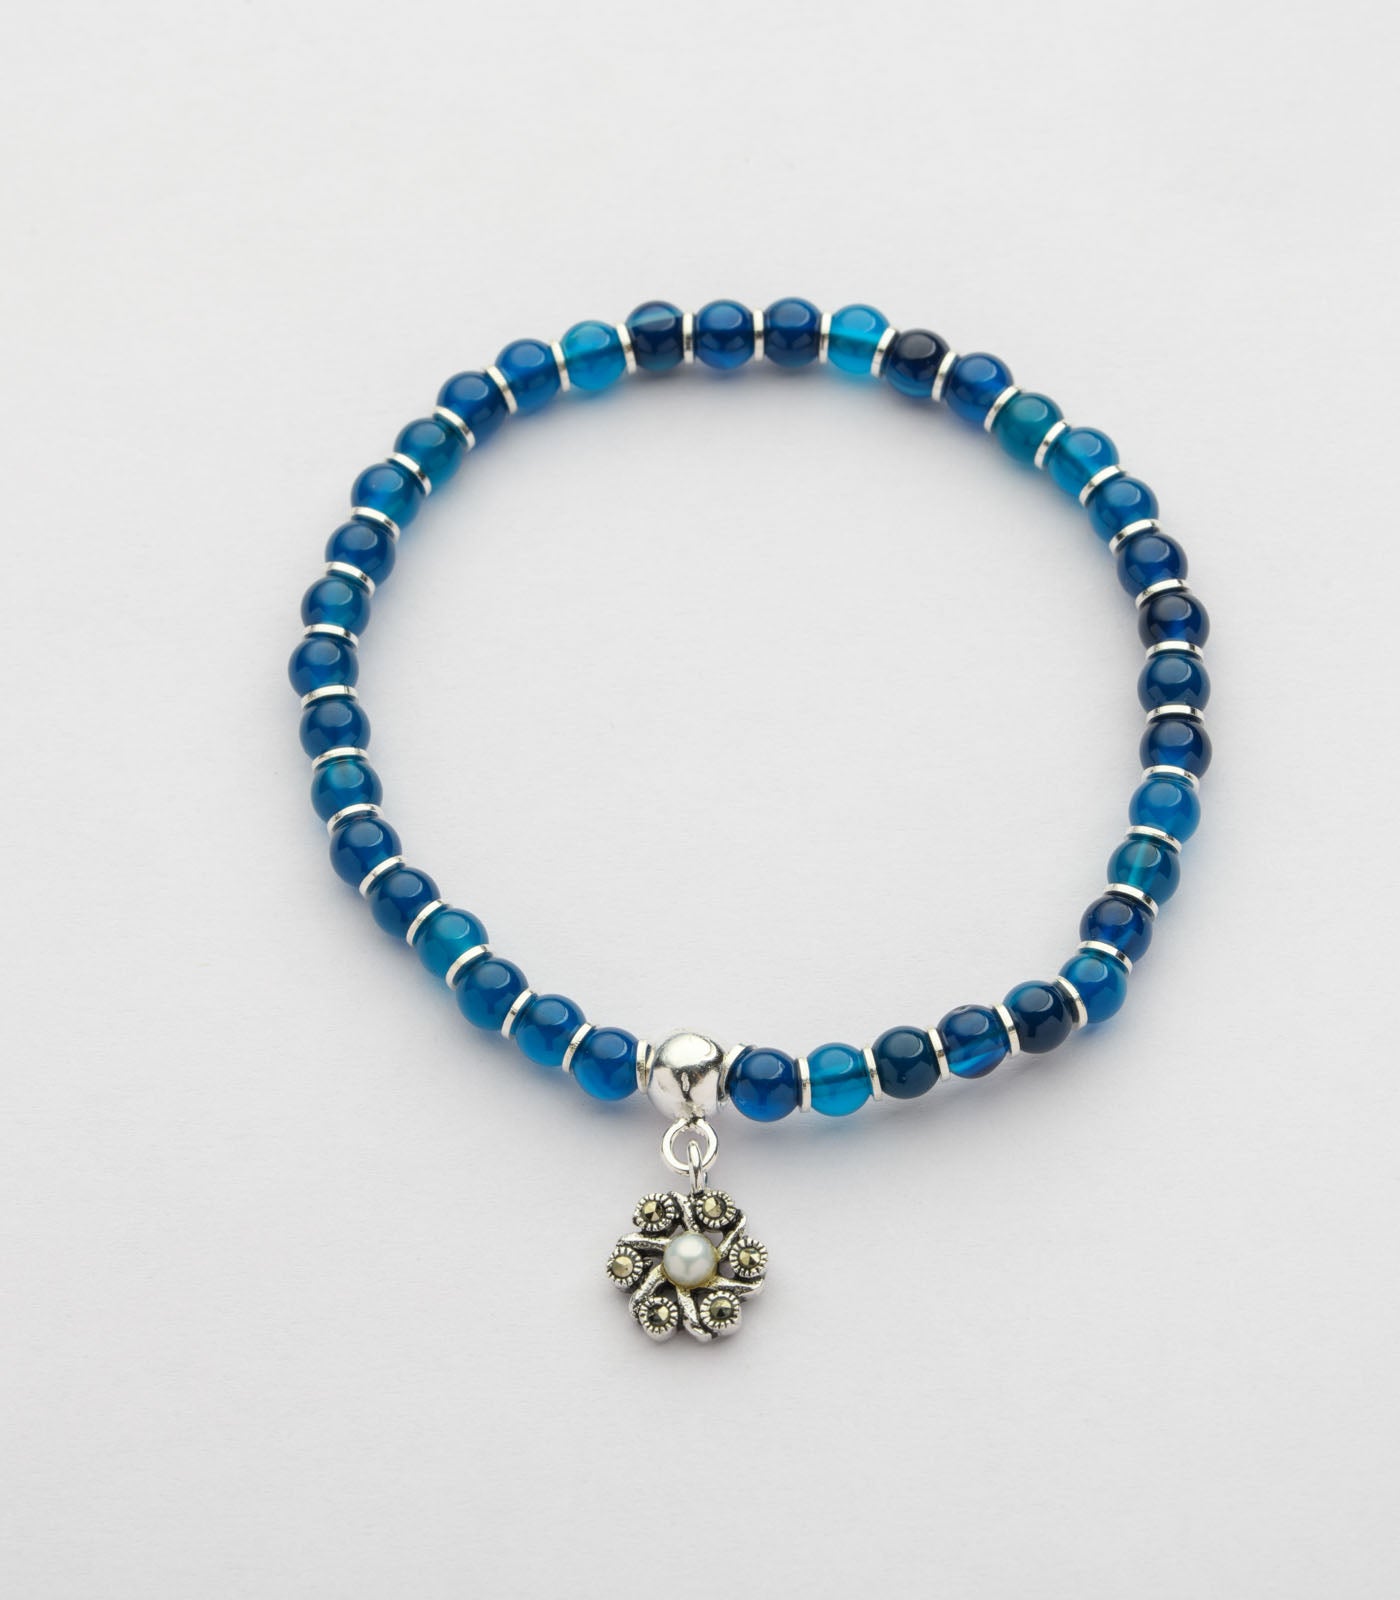 Floral Charm Beads Bracelet (Silver)